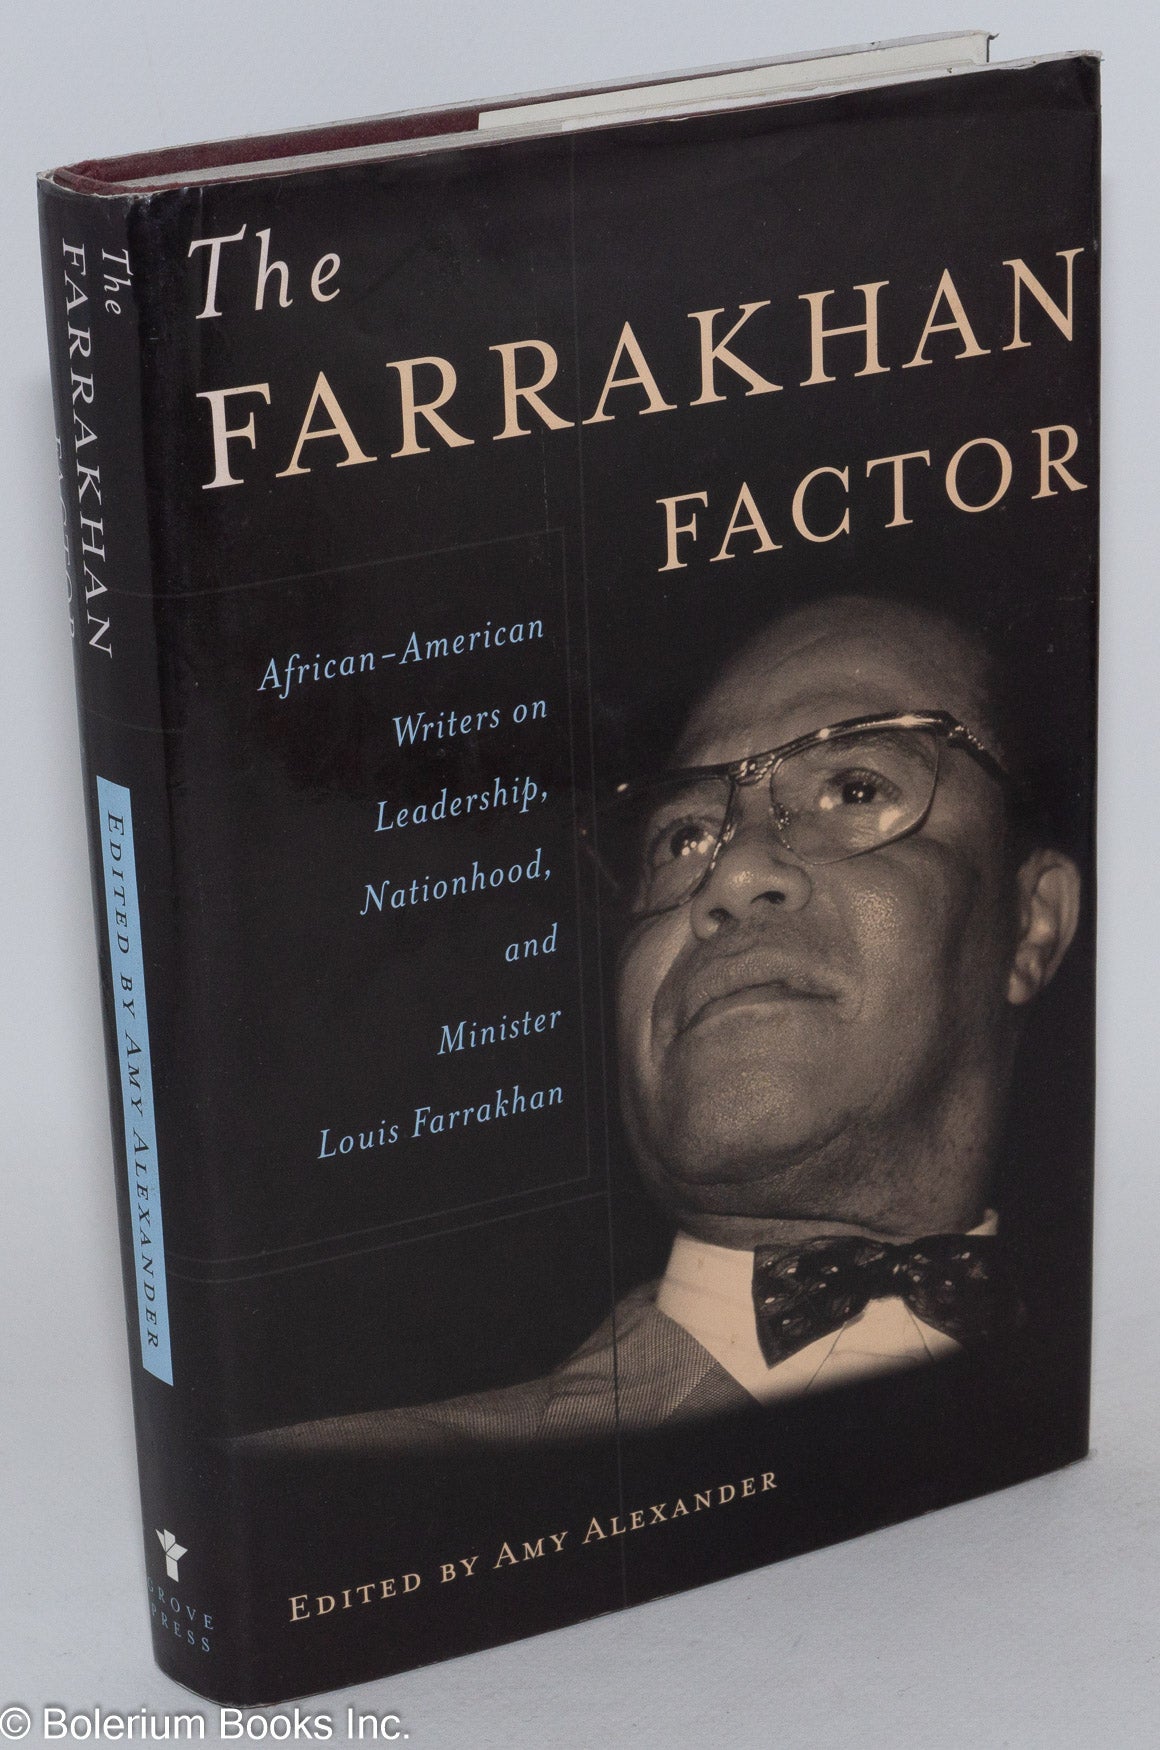 Factor:　Louis　Amy　nationhood,　gates　Minister　Louis　leadership,　Henry　Farrakhan　writers　African-American　Bell　Derrick　Alexander,　and　Farrakhan　on　The　Jr